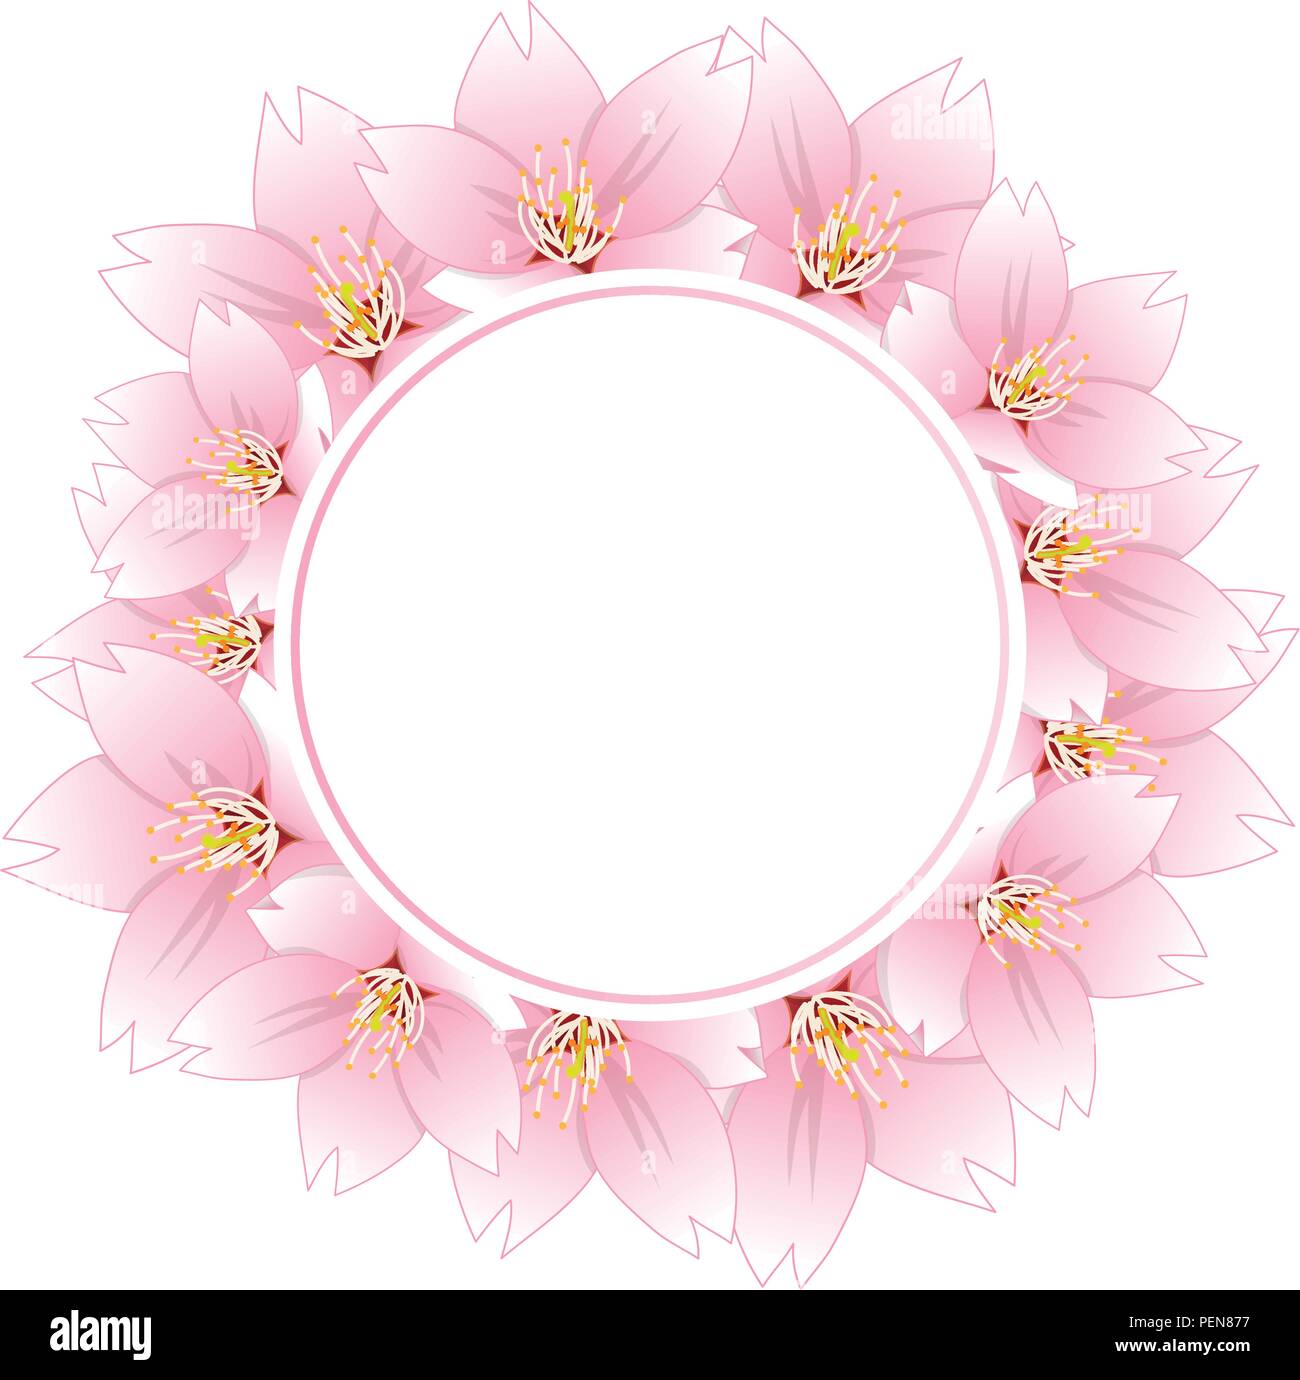 Prunus serrulata  - Cherry blossom, Sakura Banner Wreath isolated on White Background. Vector Illustration. Stock Vector